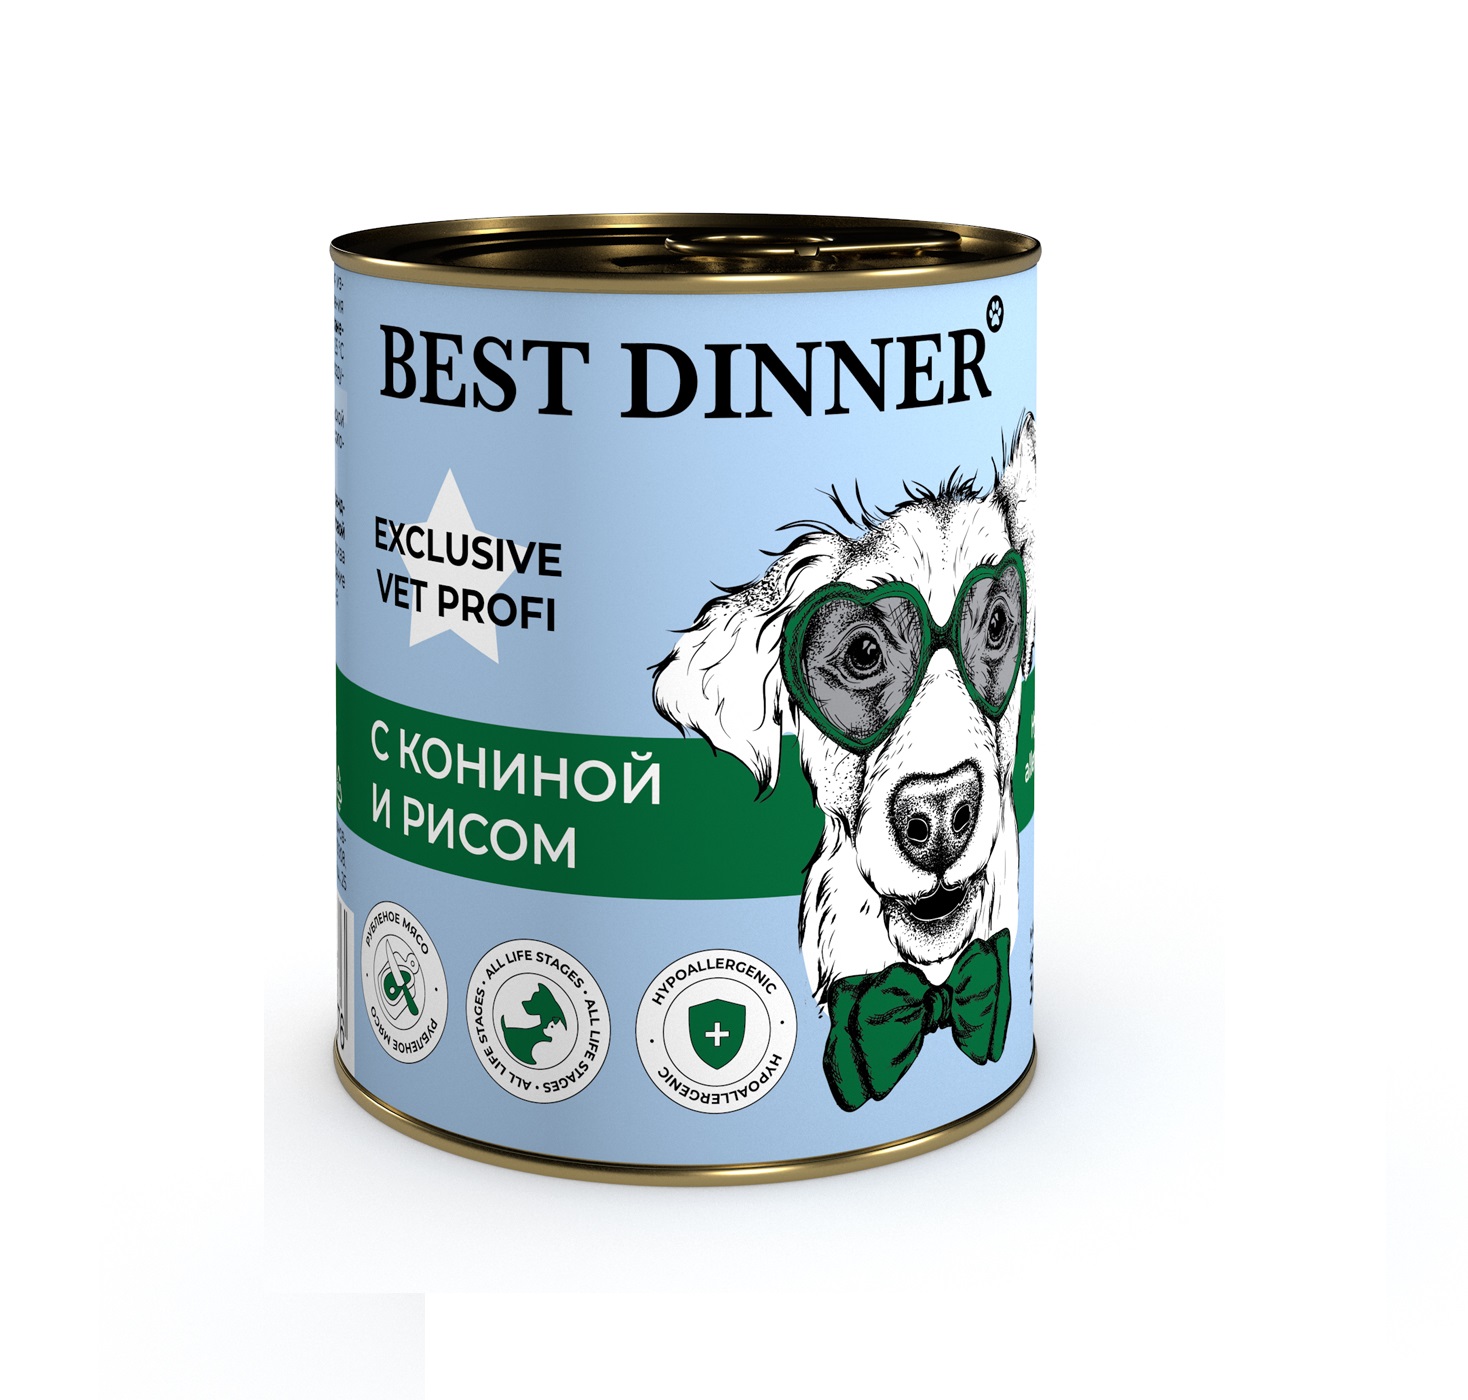 Бест Диннер 340гр - Диета Гипоаллердженик - Конина/Рис - для собак (Best Dinner) + Подарок